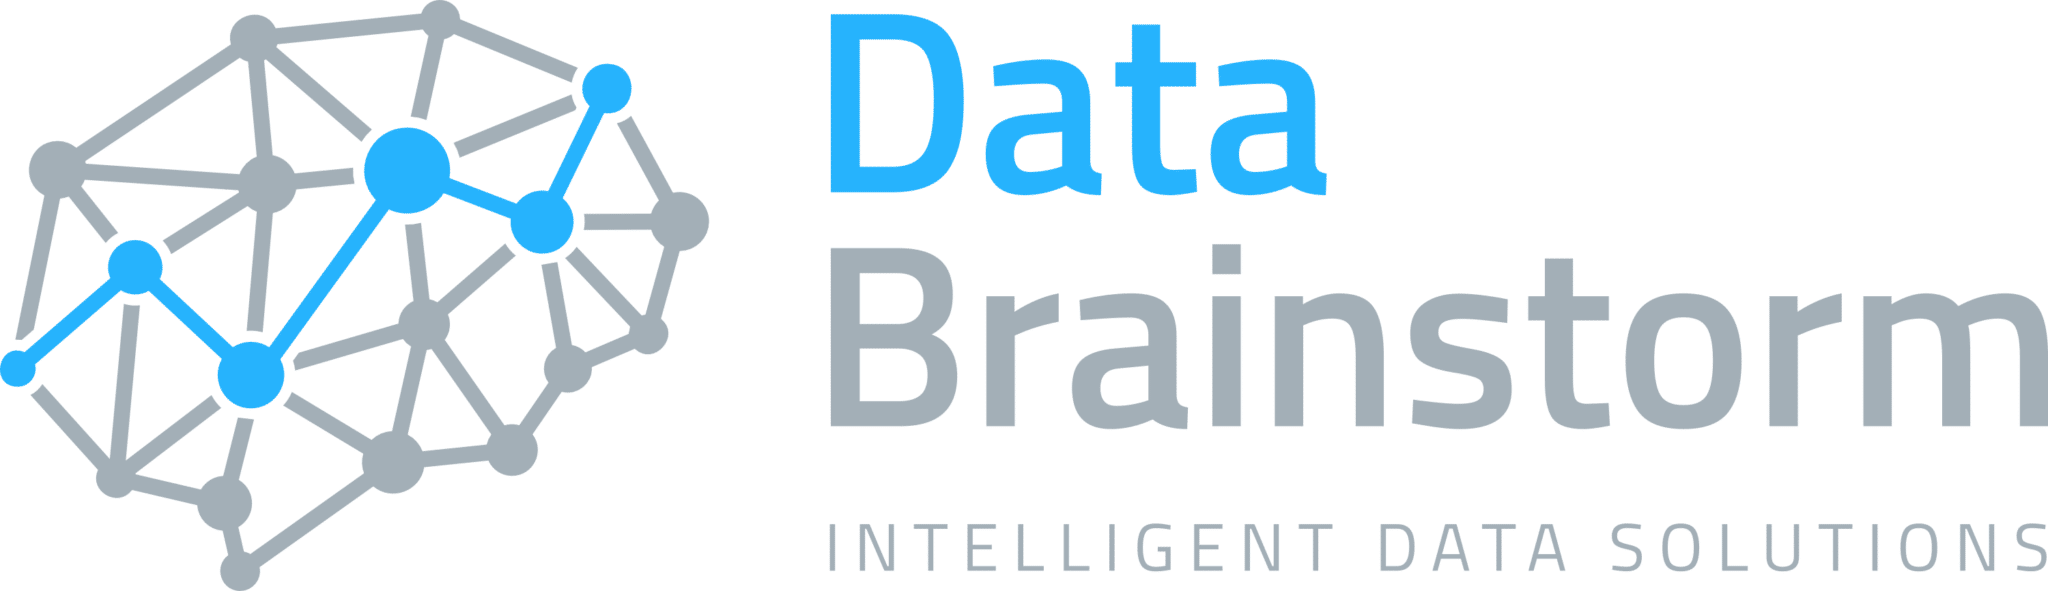 Data Brainstorm